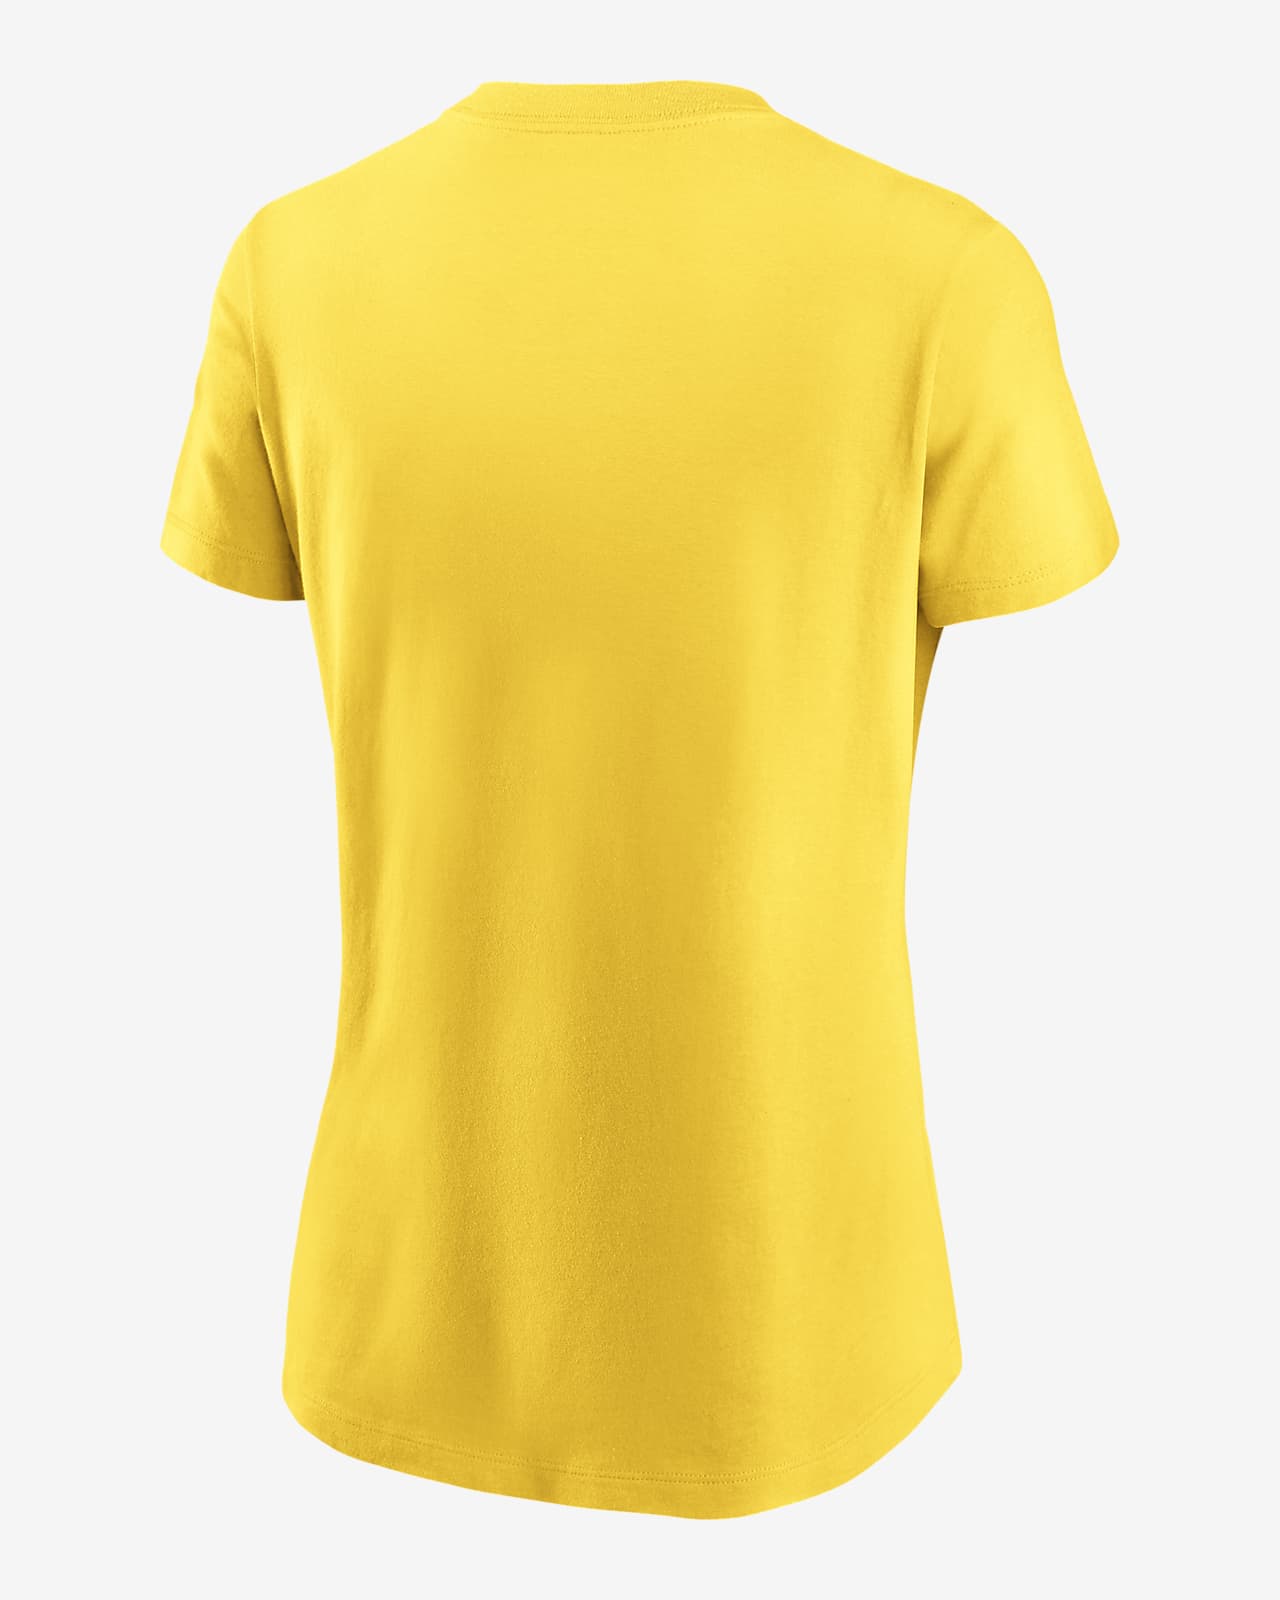 Nike City Connect Wordmark (MLB Boston Red Sox) Women's T-Shirt